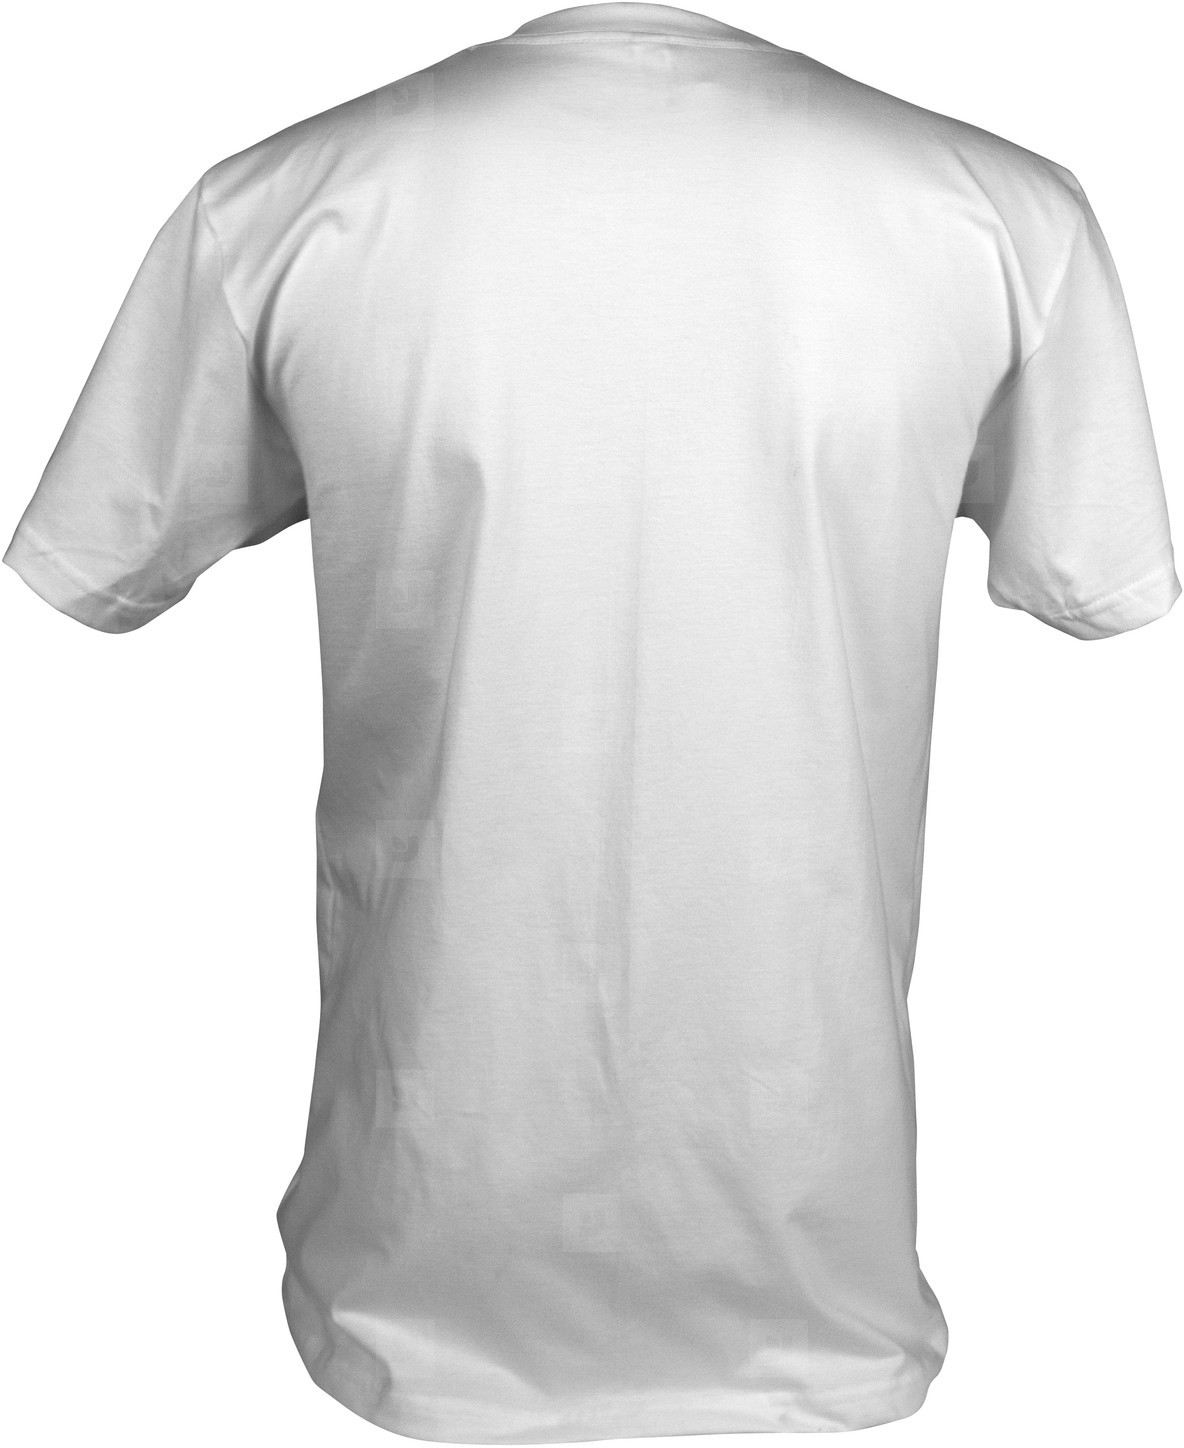 T-Shirt Mockup Template - Back